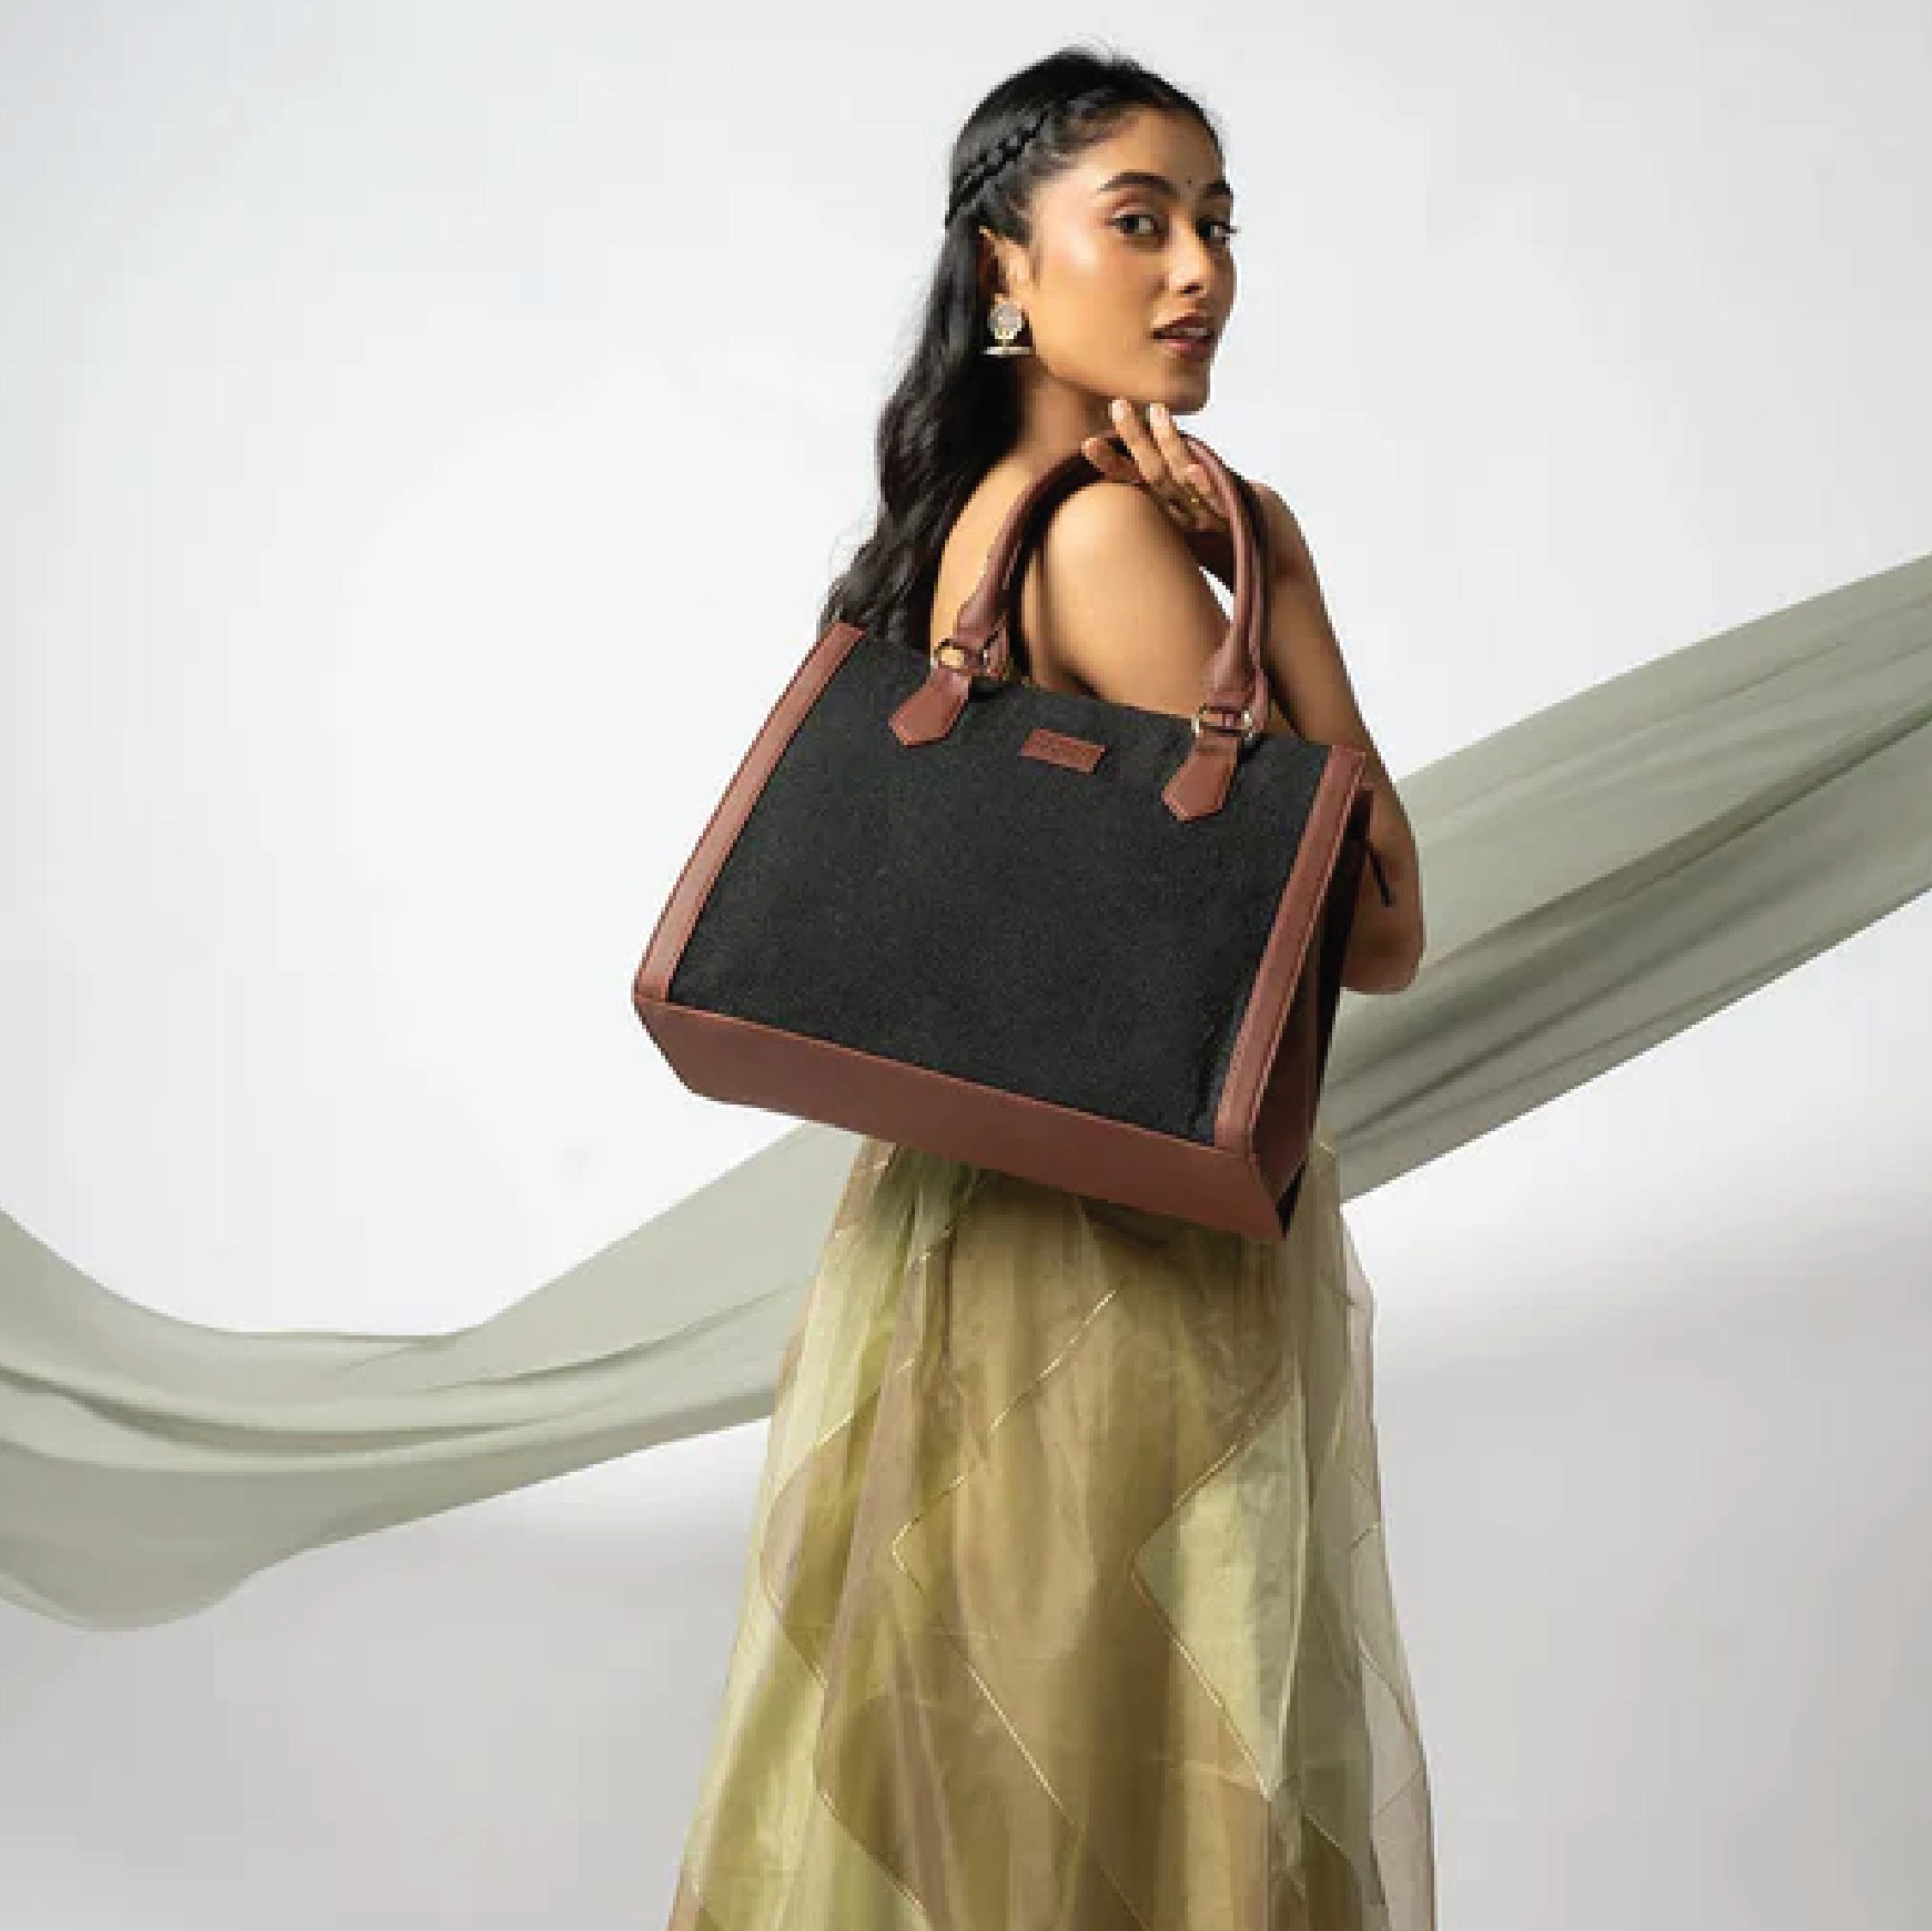 Dinnesis Women's Bags Cheap Fabric Tote Leather Bag for Handbags Women's  Purse Satchel Shoulder Bags Fishing Rod Bags, black, One Size:  Amazon.co.uk: Fashion